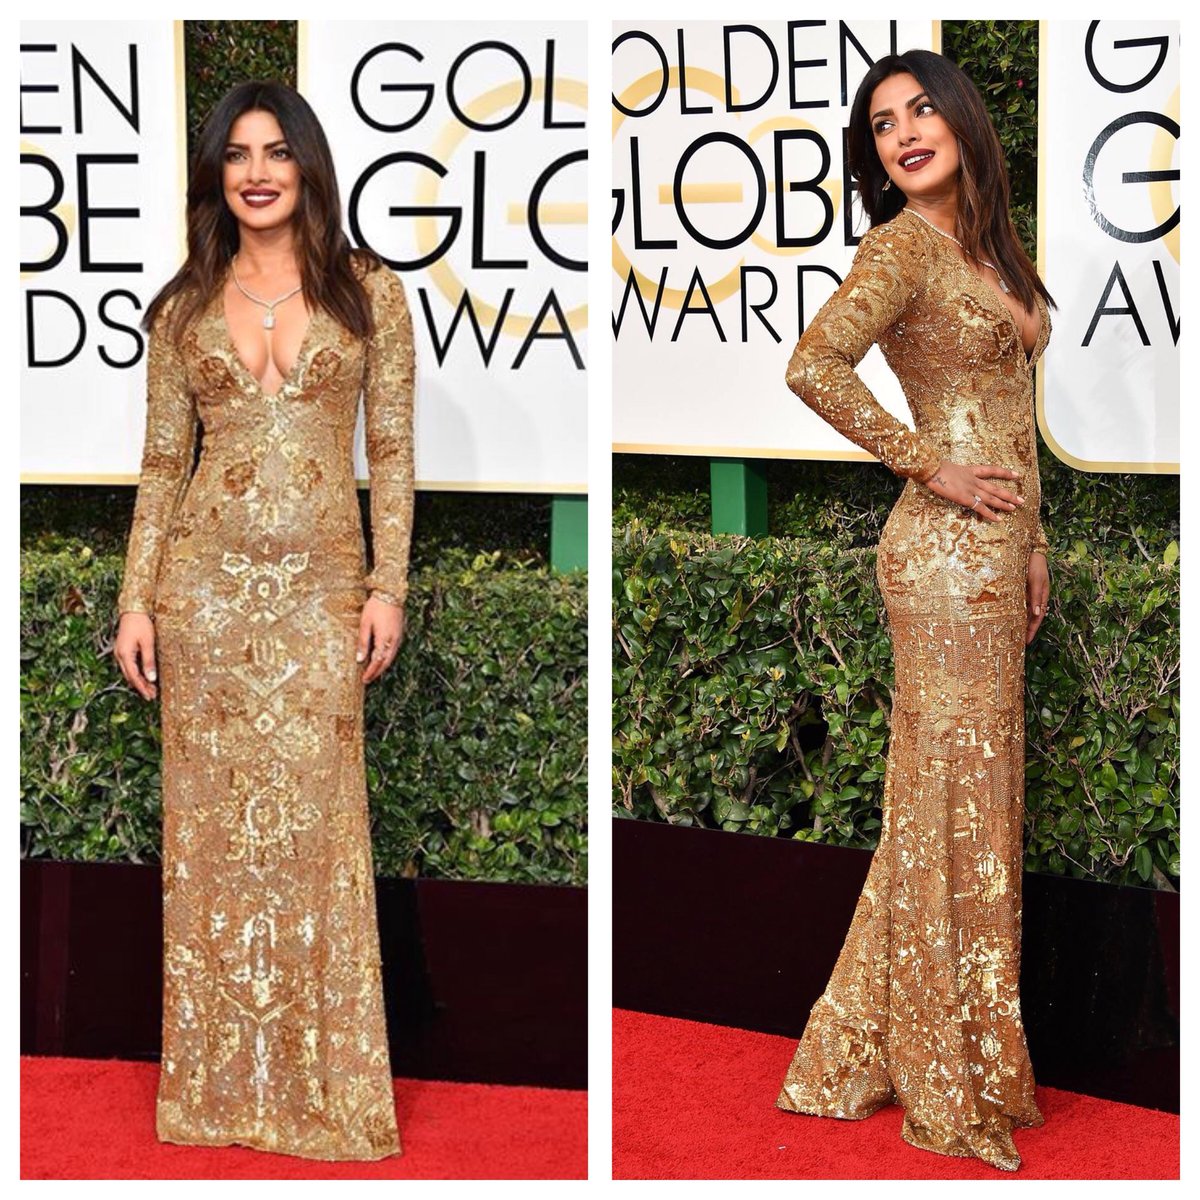 Priyanka Chopra, Golden Globes, Golden Globes priyanka, Golden Globes Priyanka Chopra, Golden Globes Priyanka Chopra dress